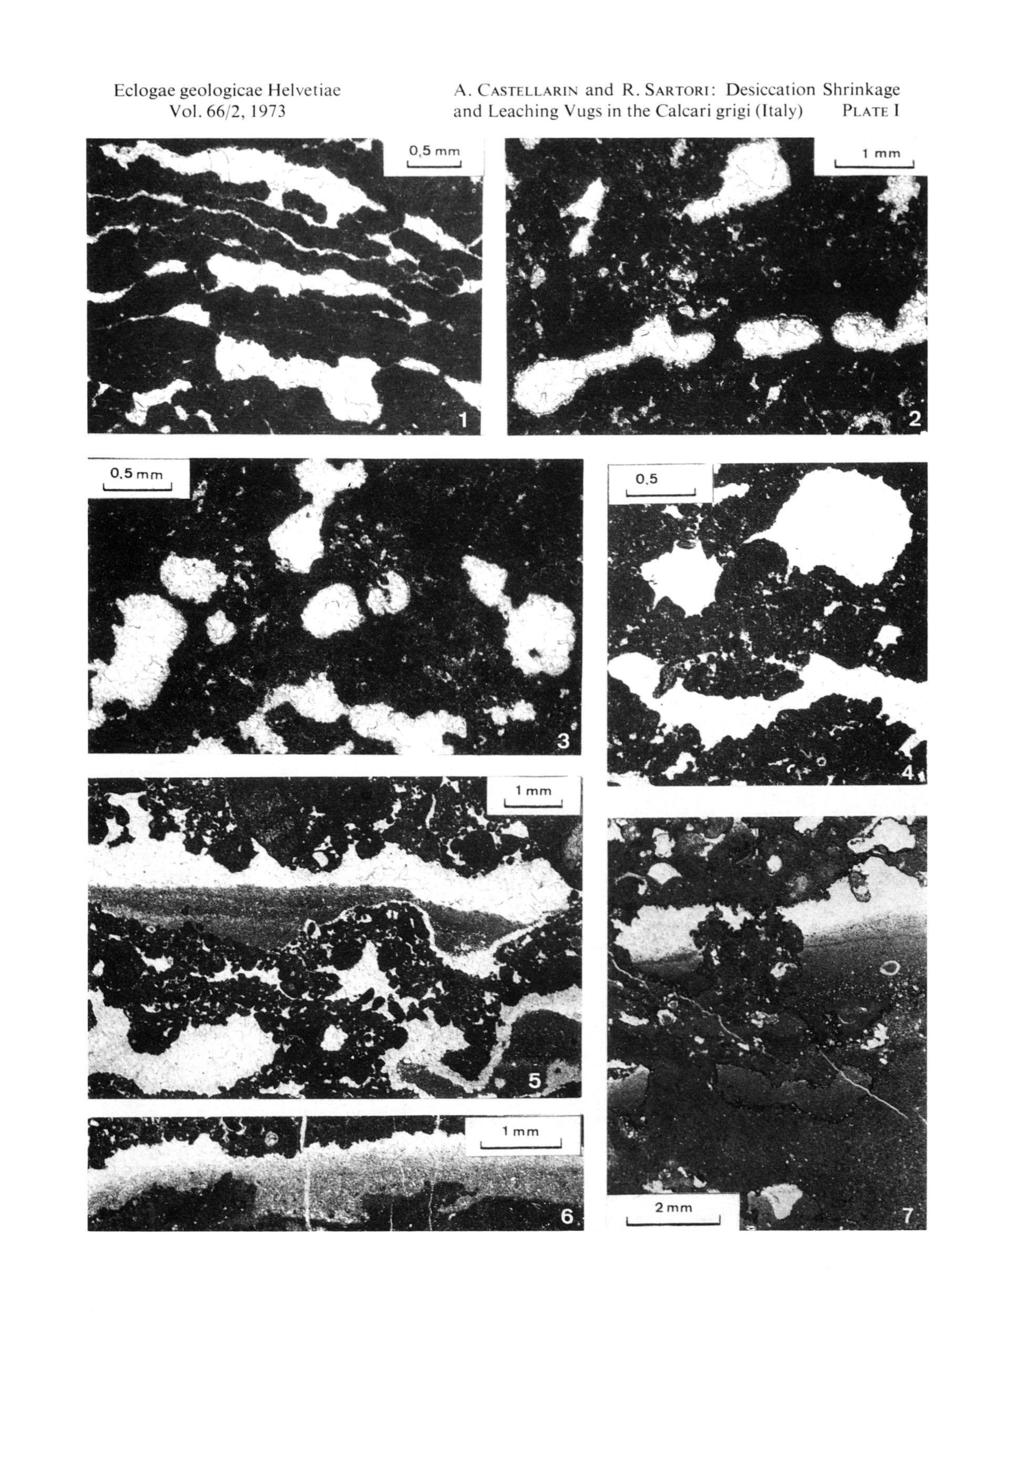 Eclogae geologicae Helvetiae Vol. 66/2, 1973 '^ 0.5 A. Castellarin and R.